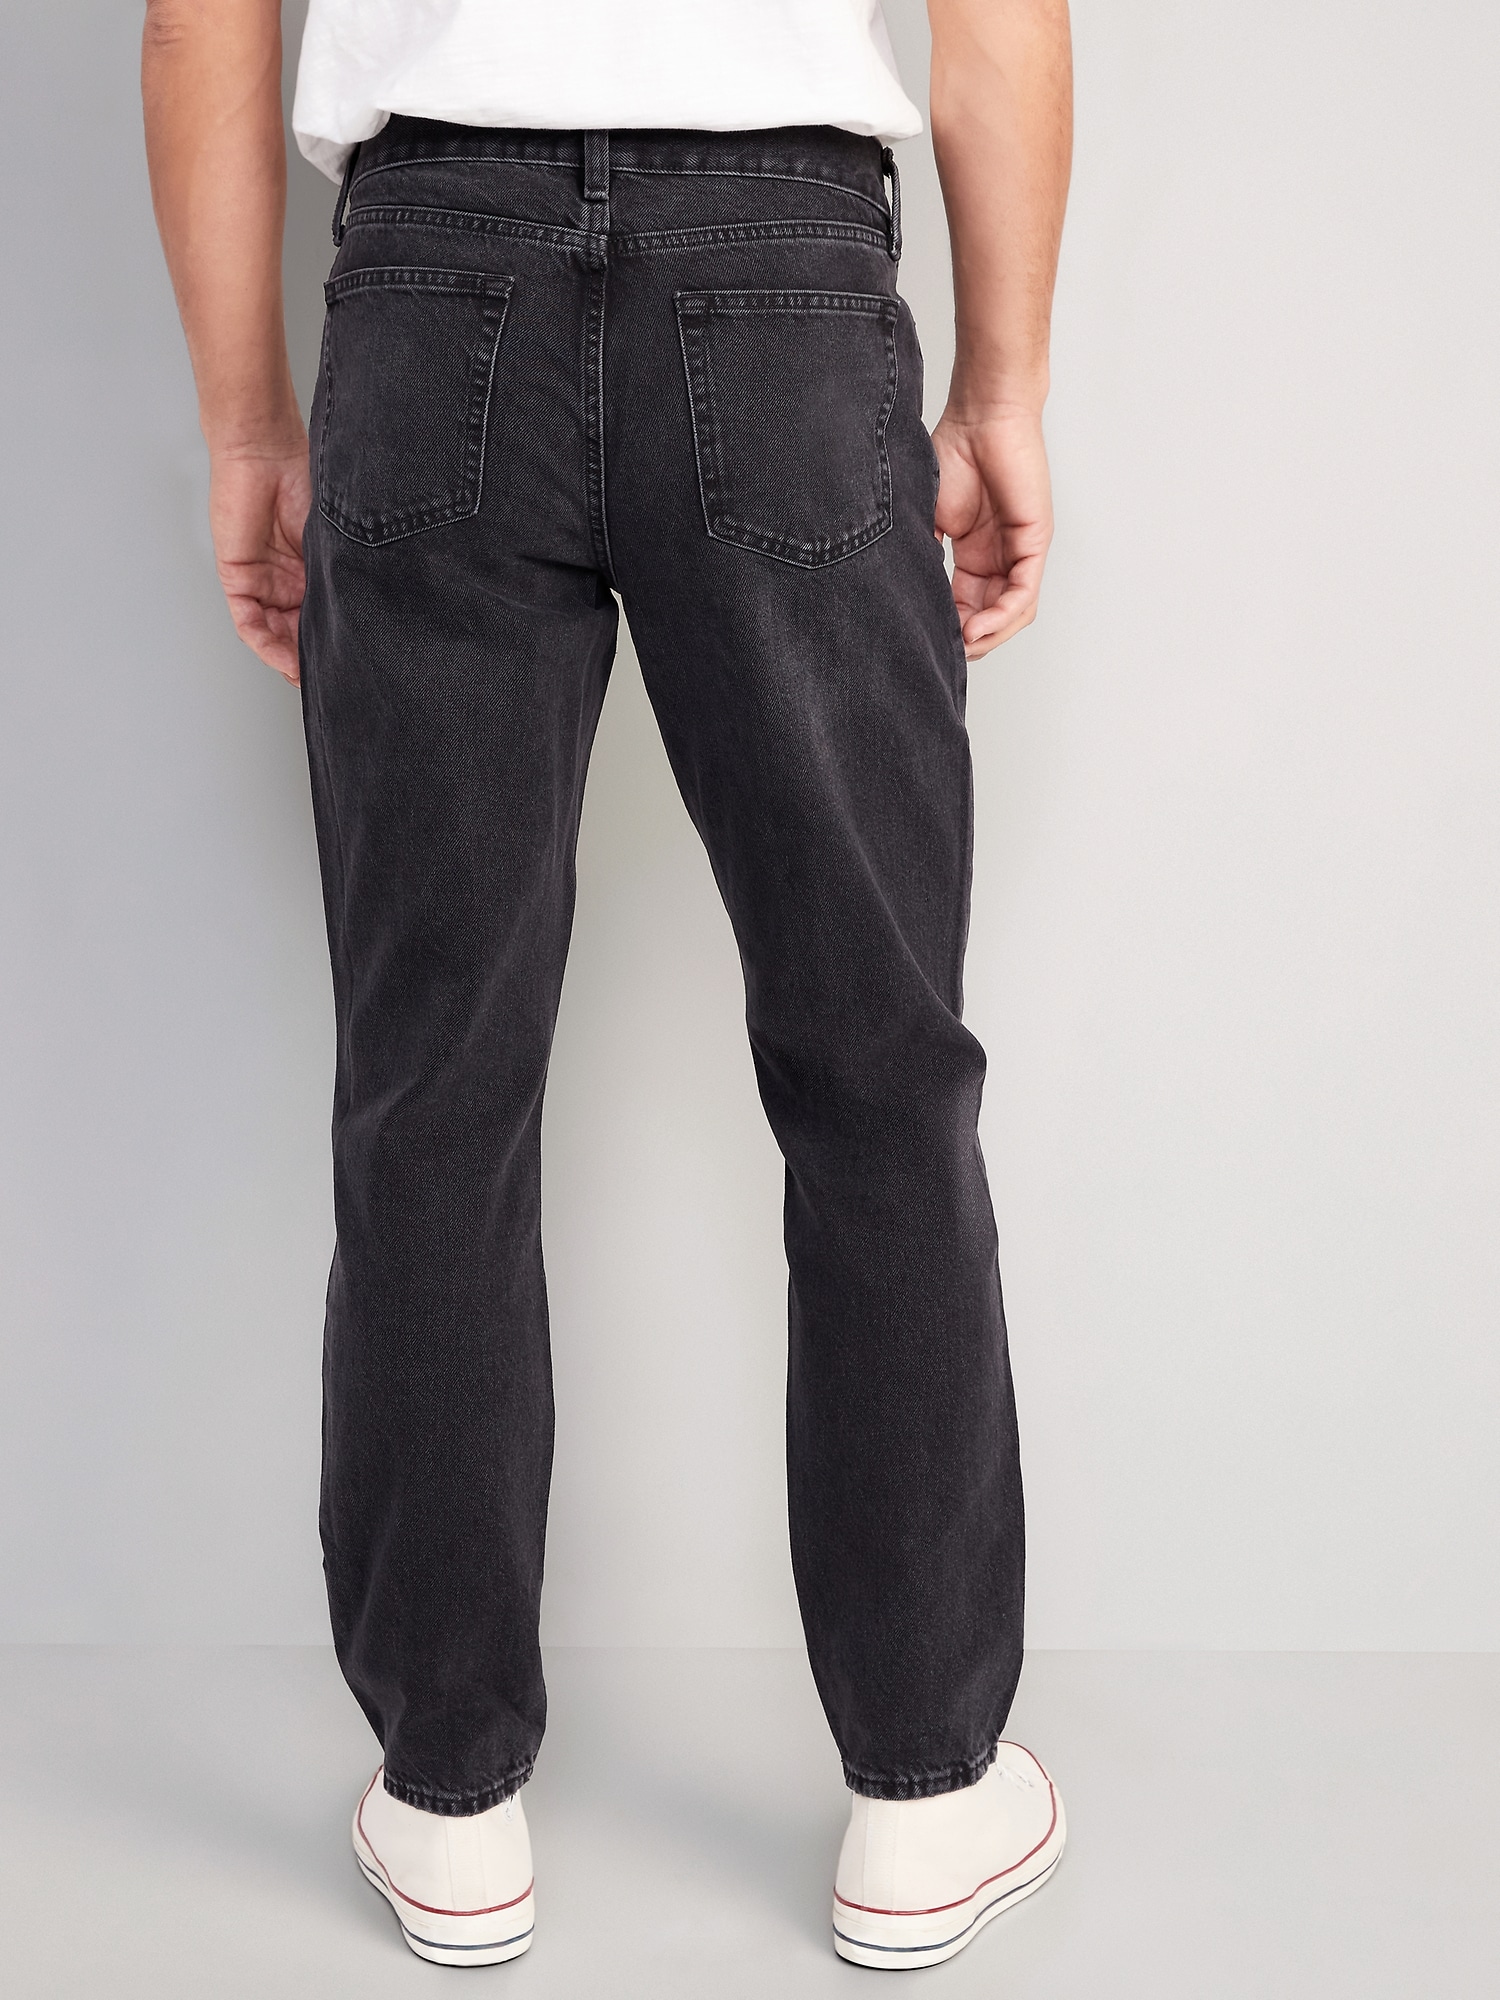 møbel ønskelig Hub Original Straight Taper Non-Stretch Black Jeans for Men | Old Navy